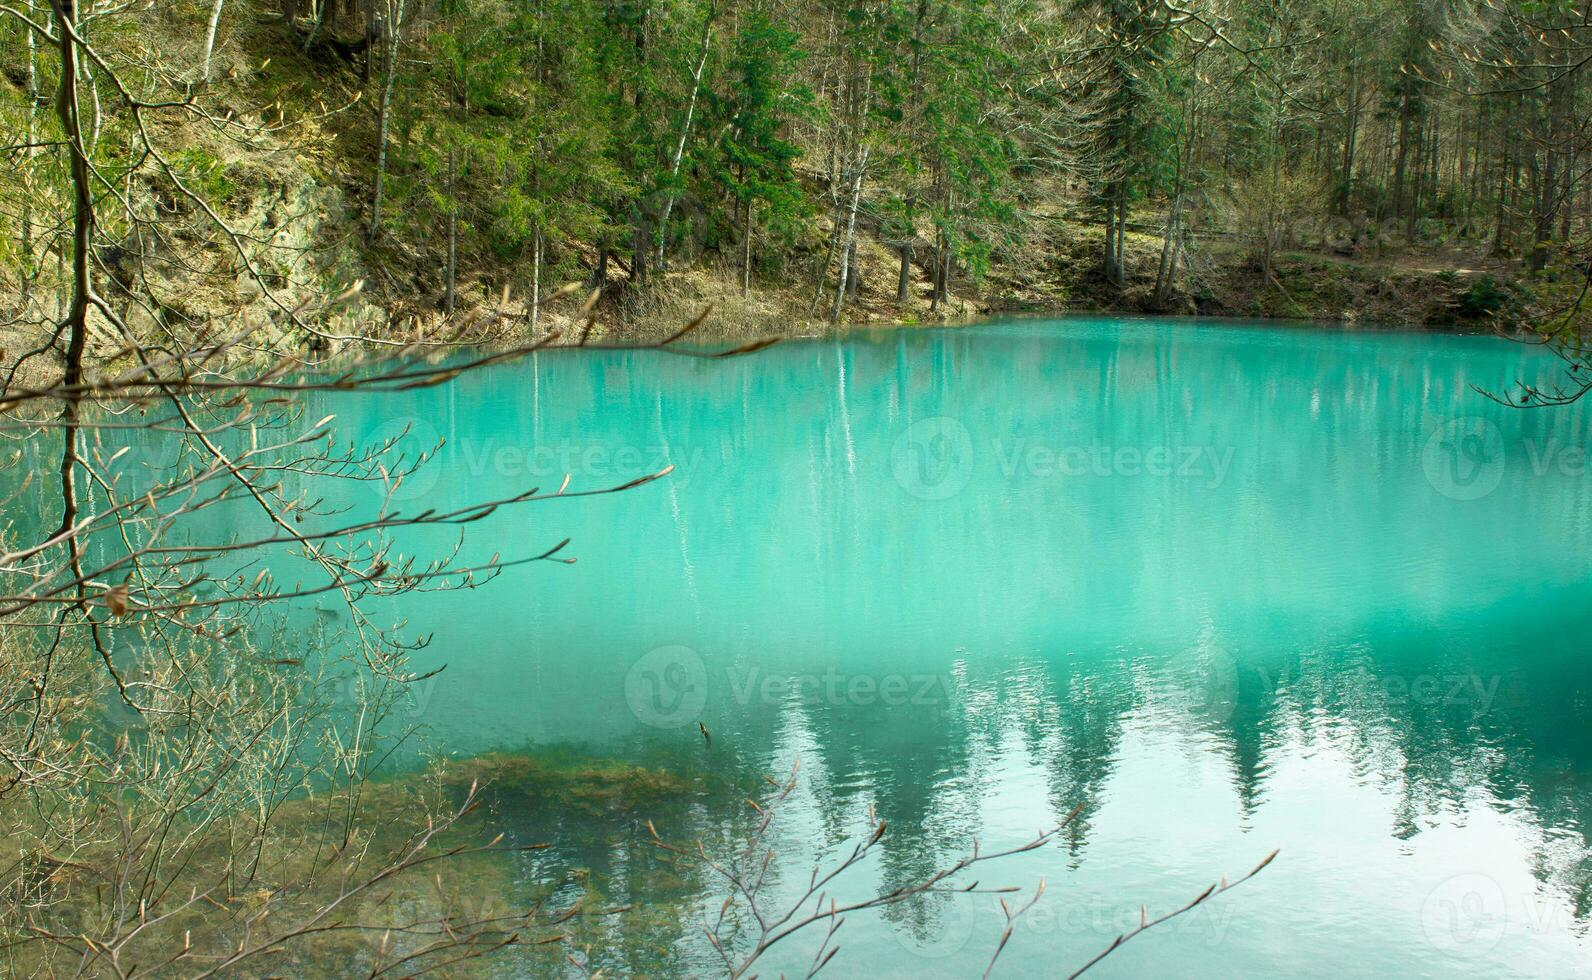 A beautiful turquoise lake. One of the four mountain lakes called Kolorowe jeziorka photo